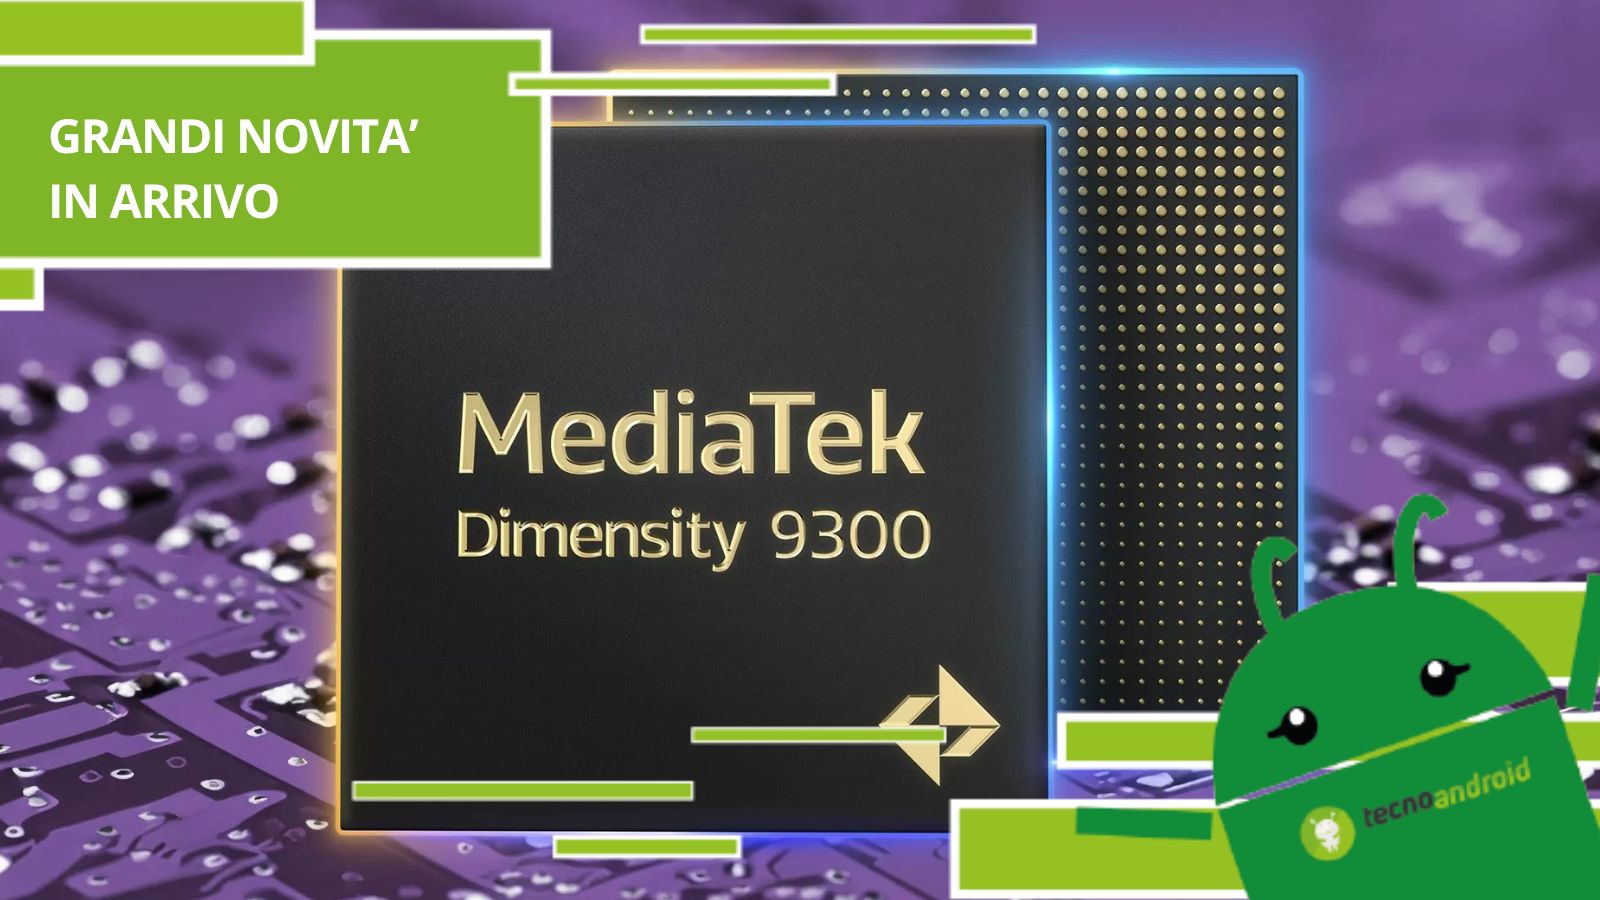 MediaTek Dimensity 9300, pronto a superare persino Qualcomm ed Apple